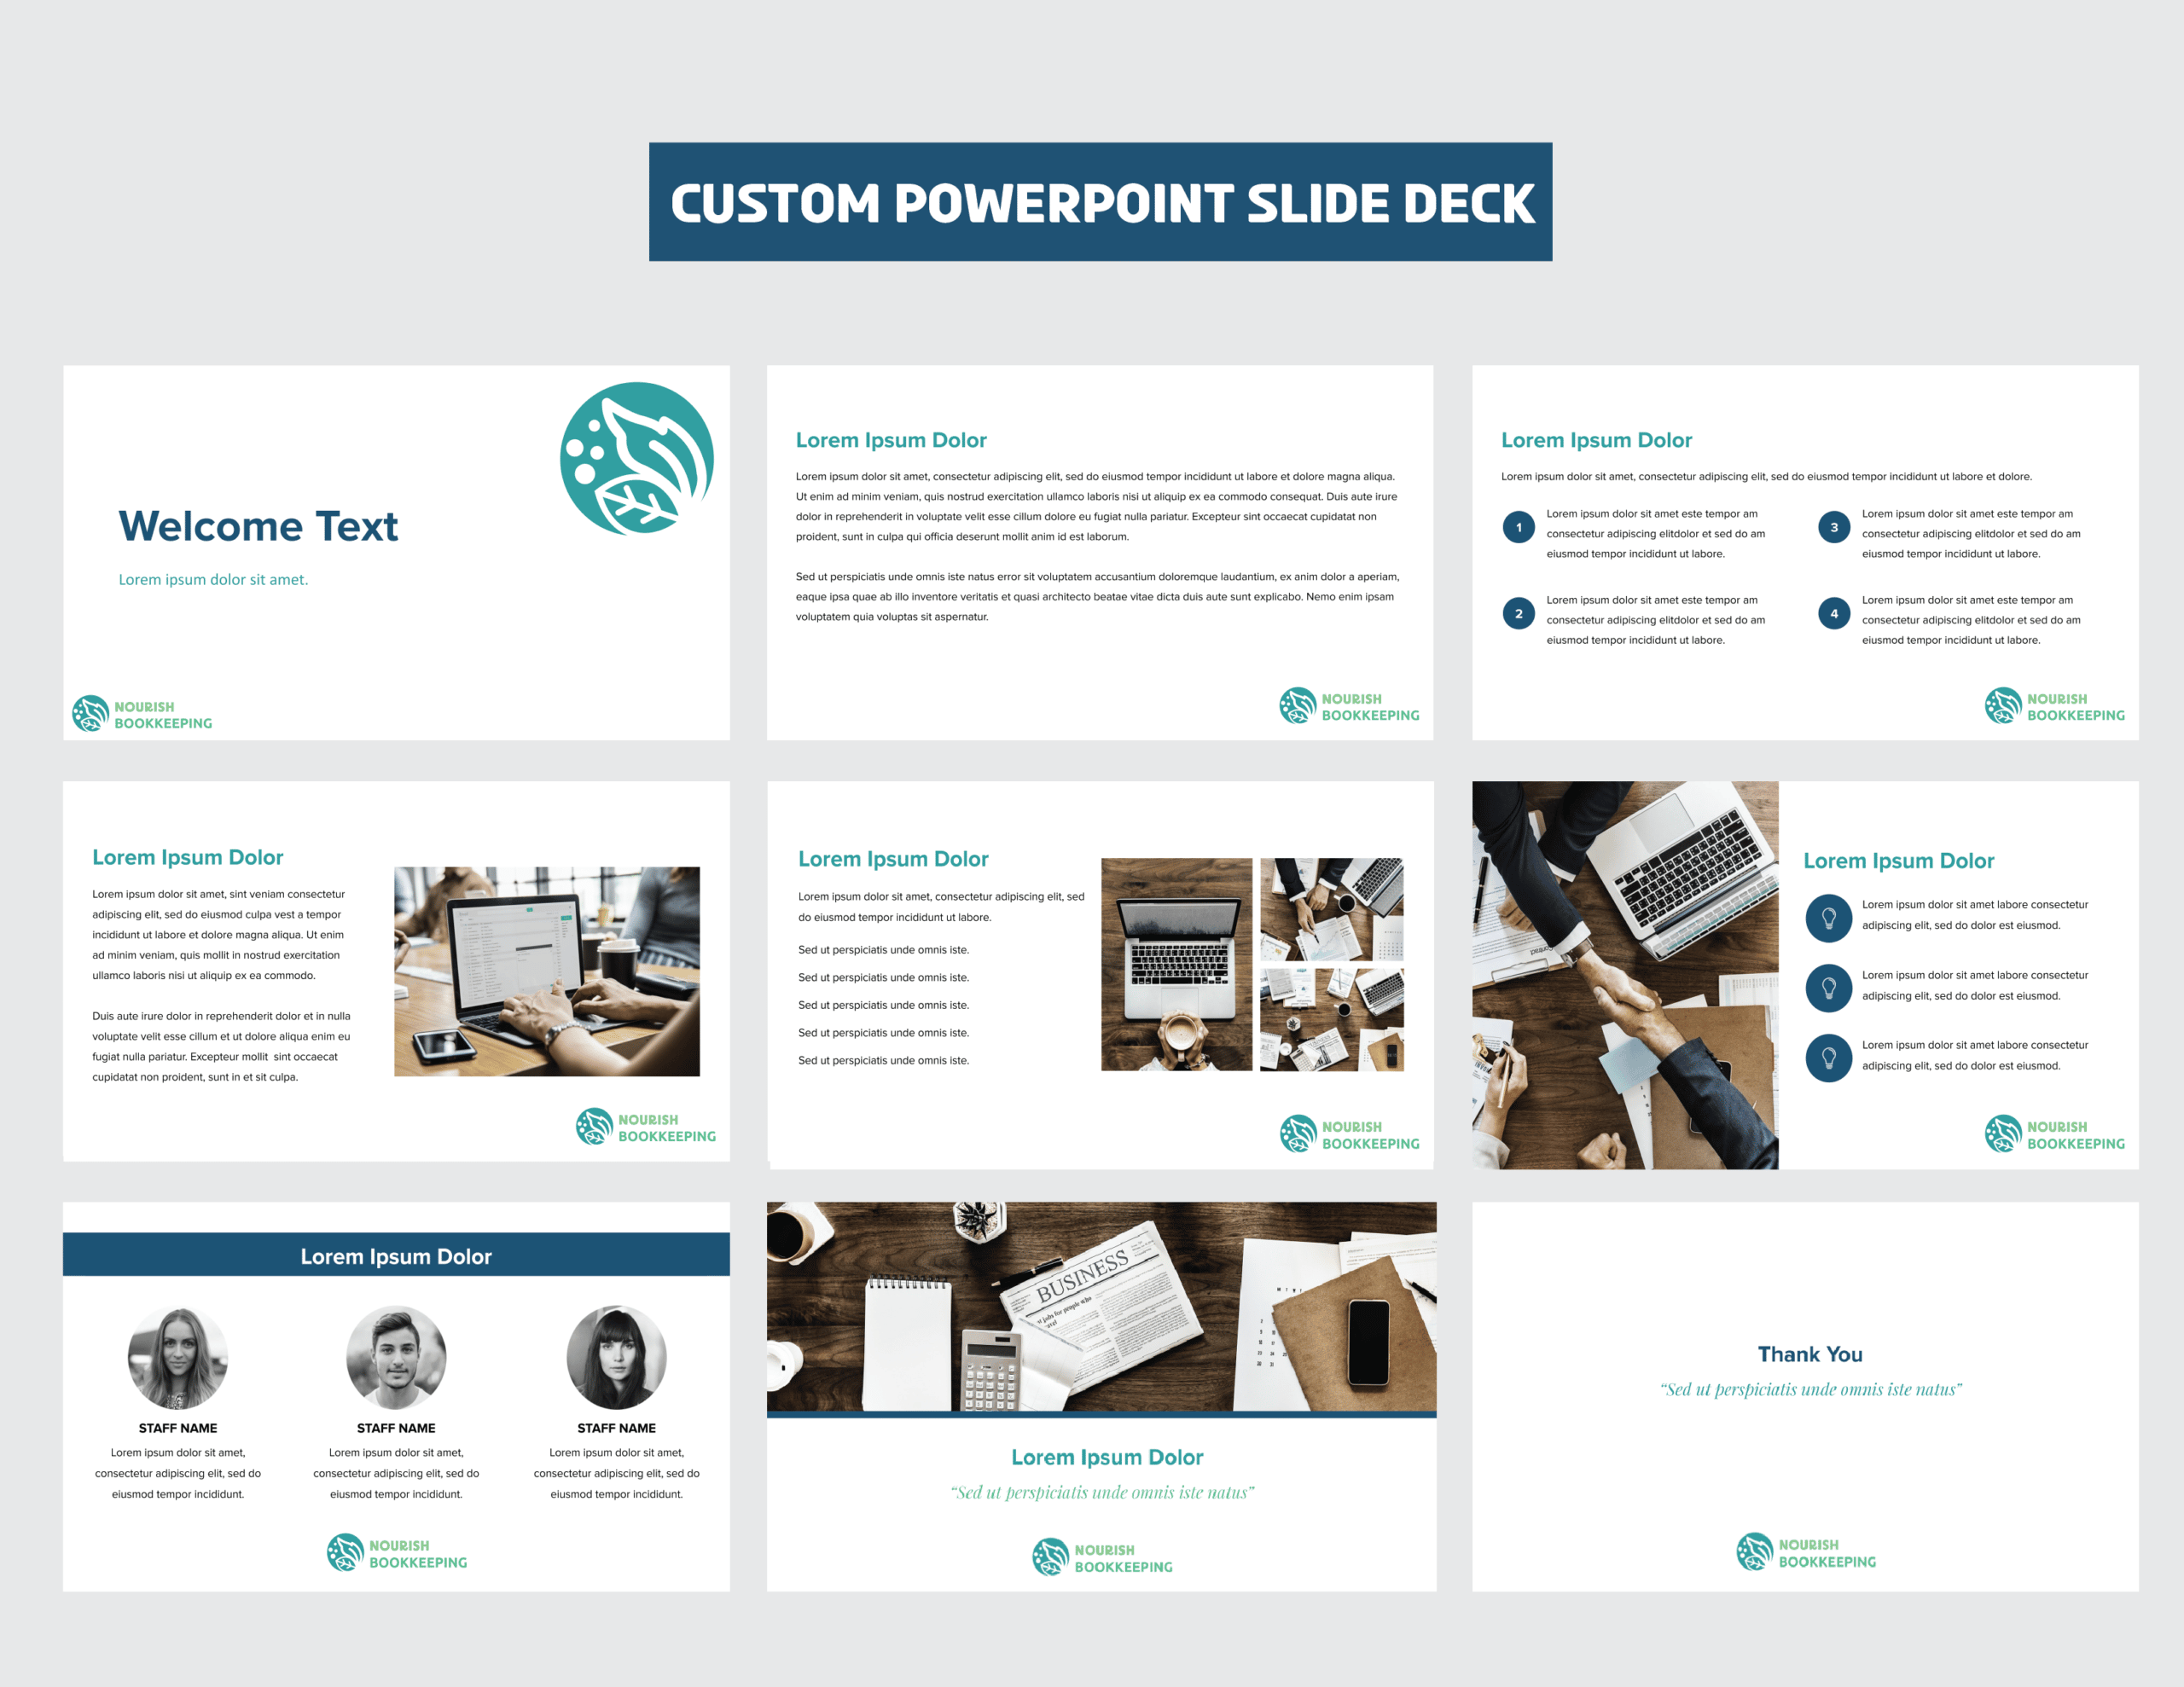 05_NourishBookkeeping_Custom Powerpoint Slide Deck